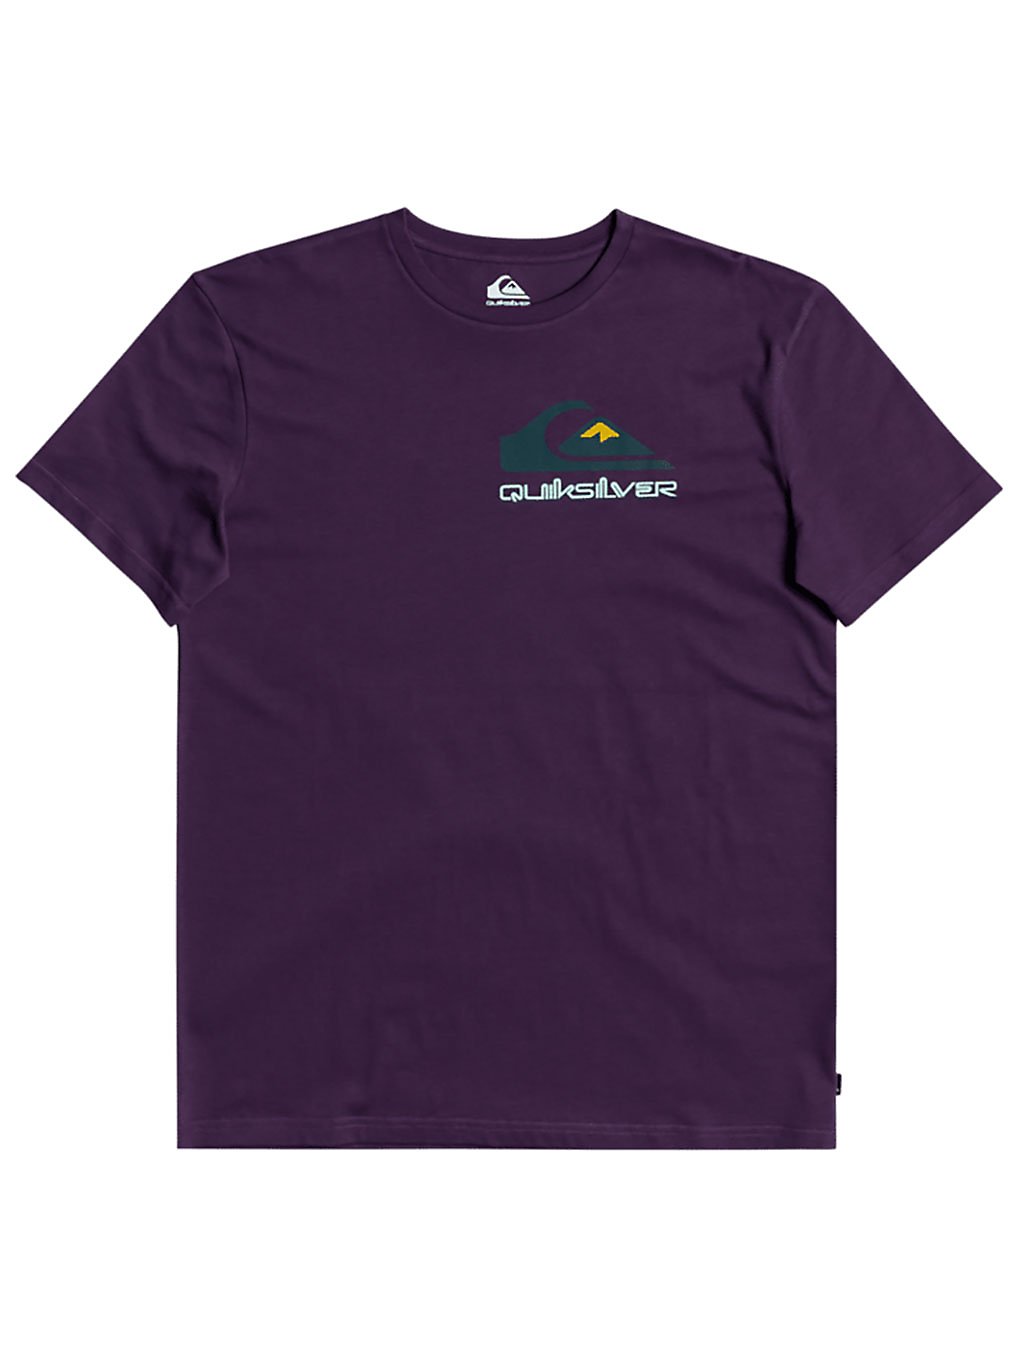 Quiksilver Reflect T-Shirt purple plumeria